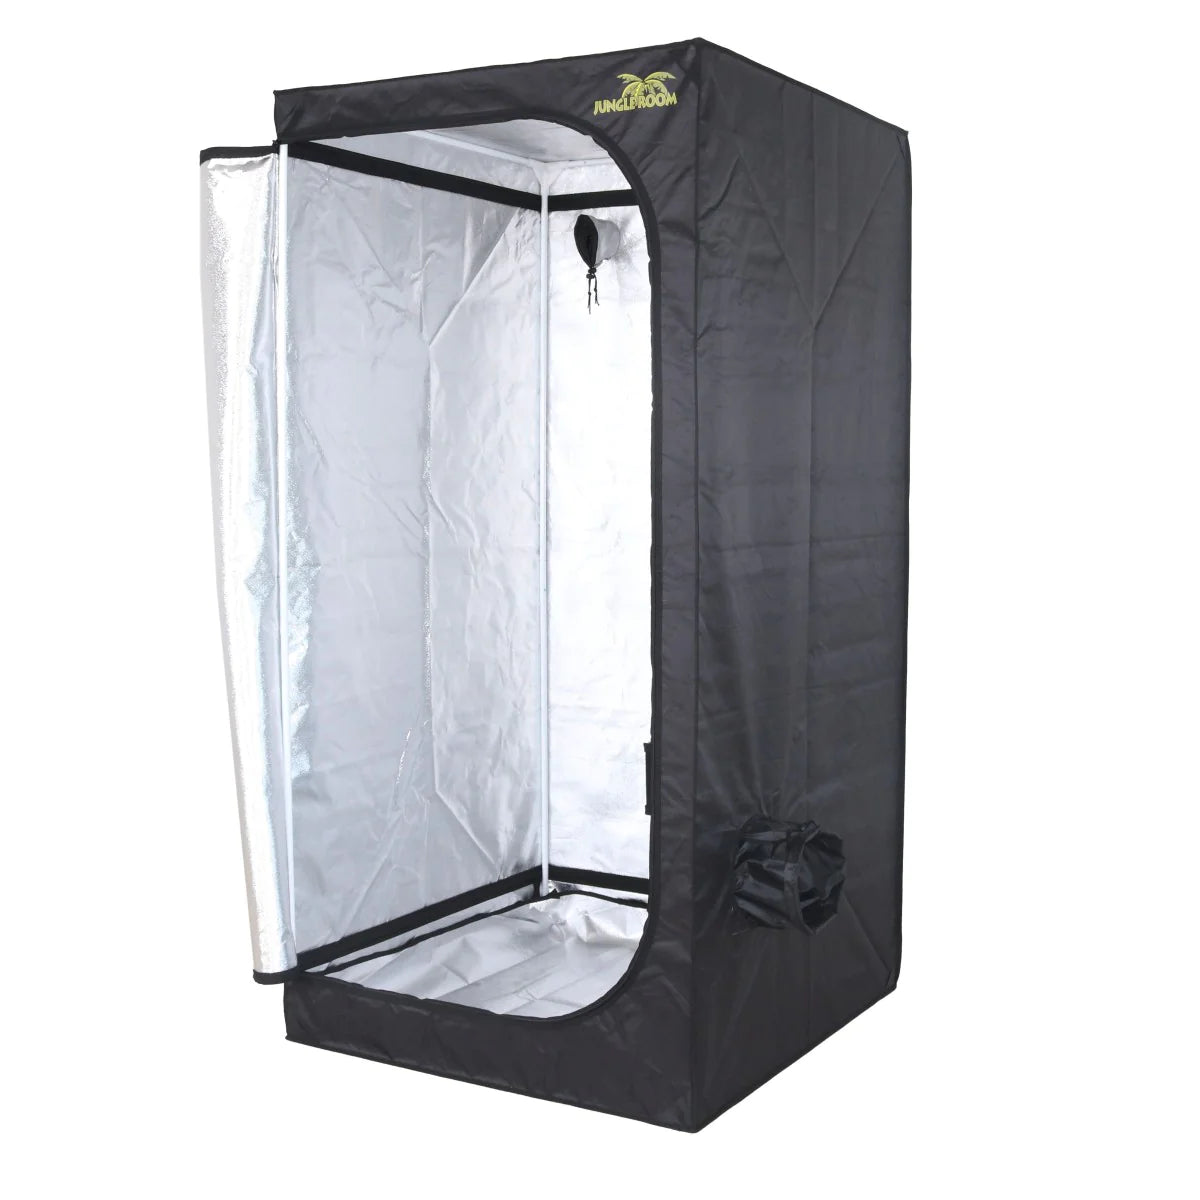 LED Grow Tent Starter Kit 150x150x200cm